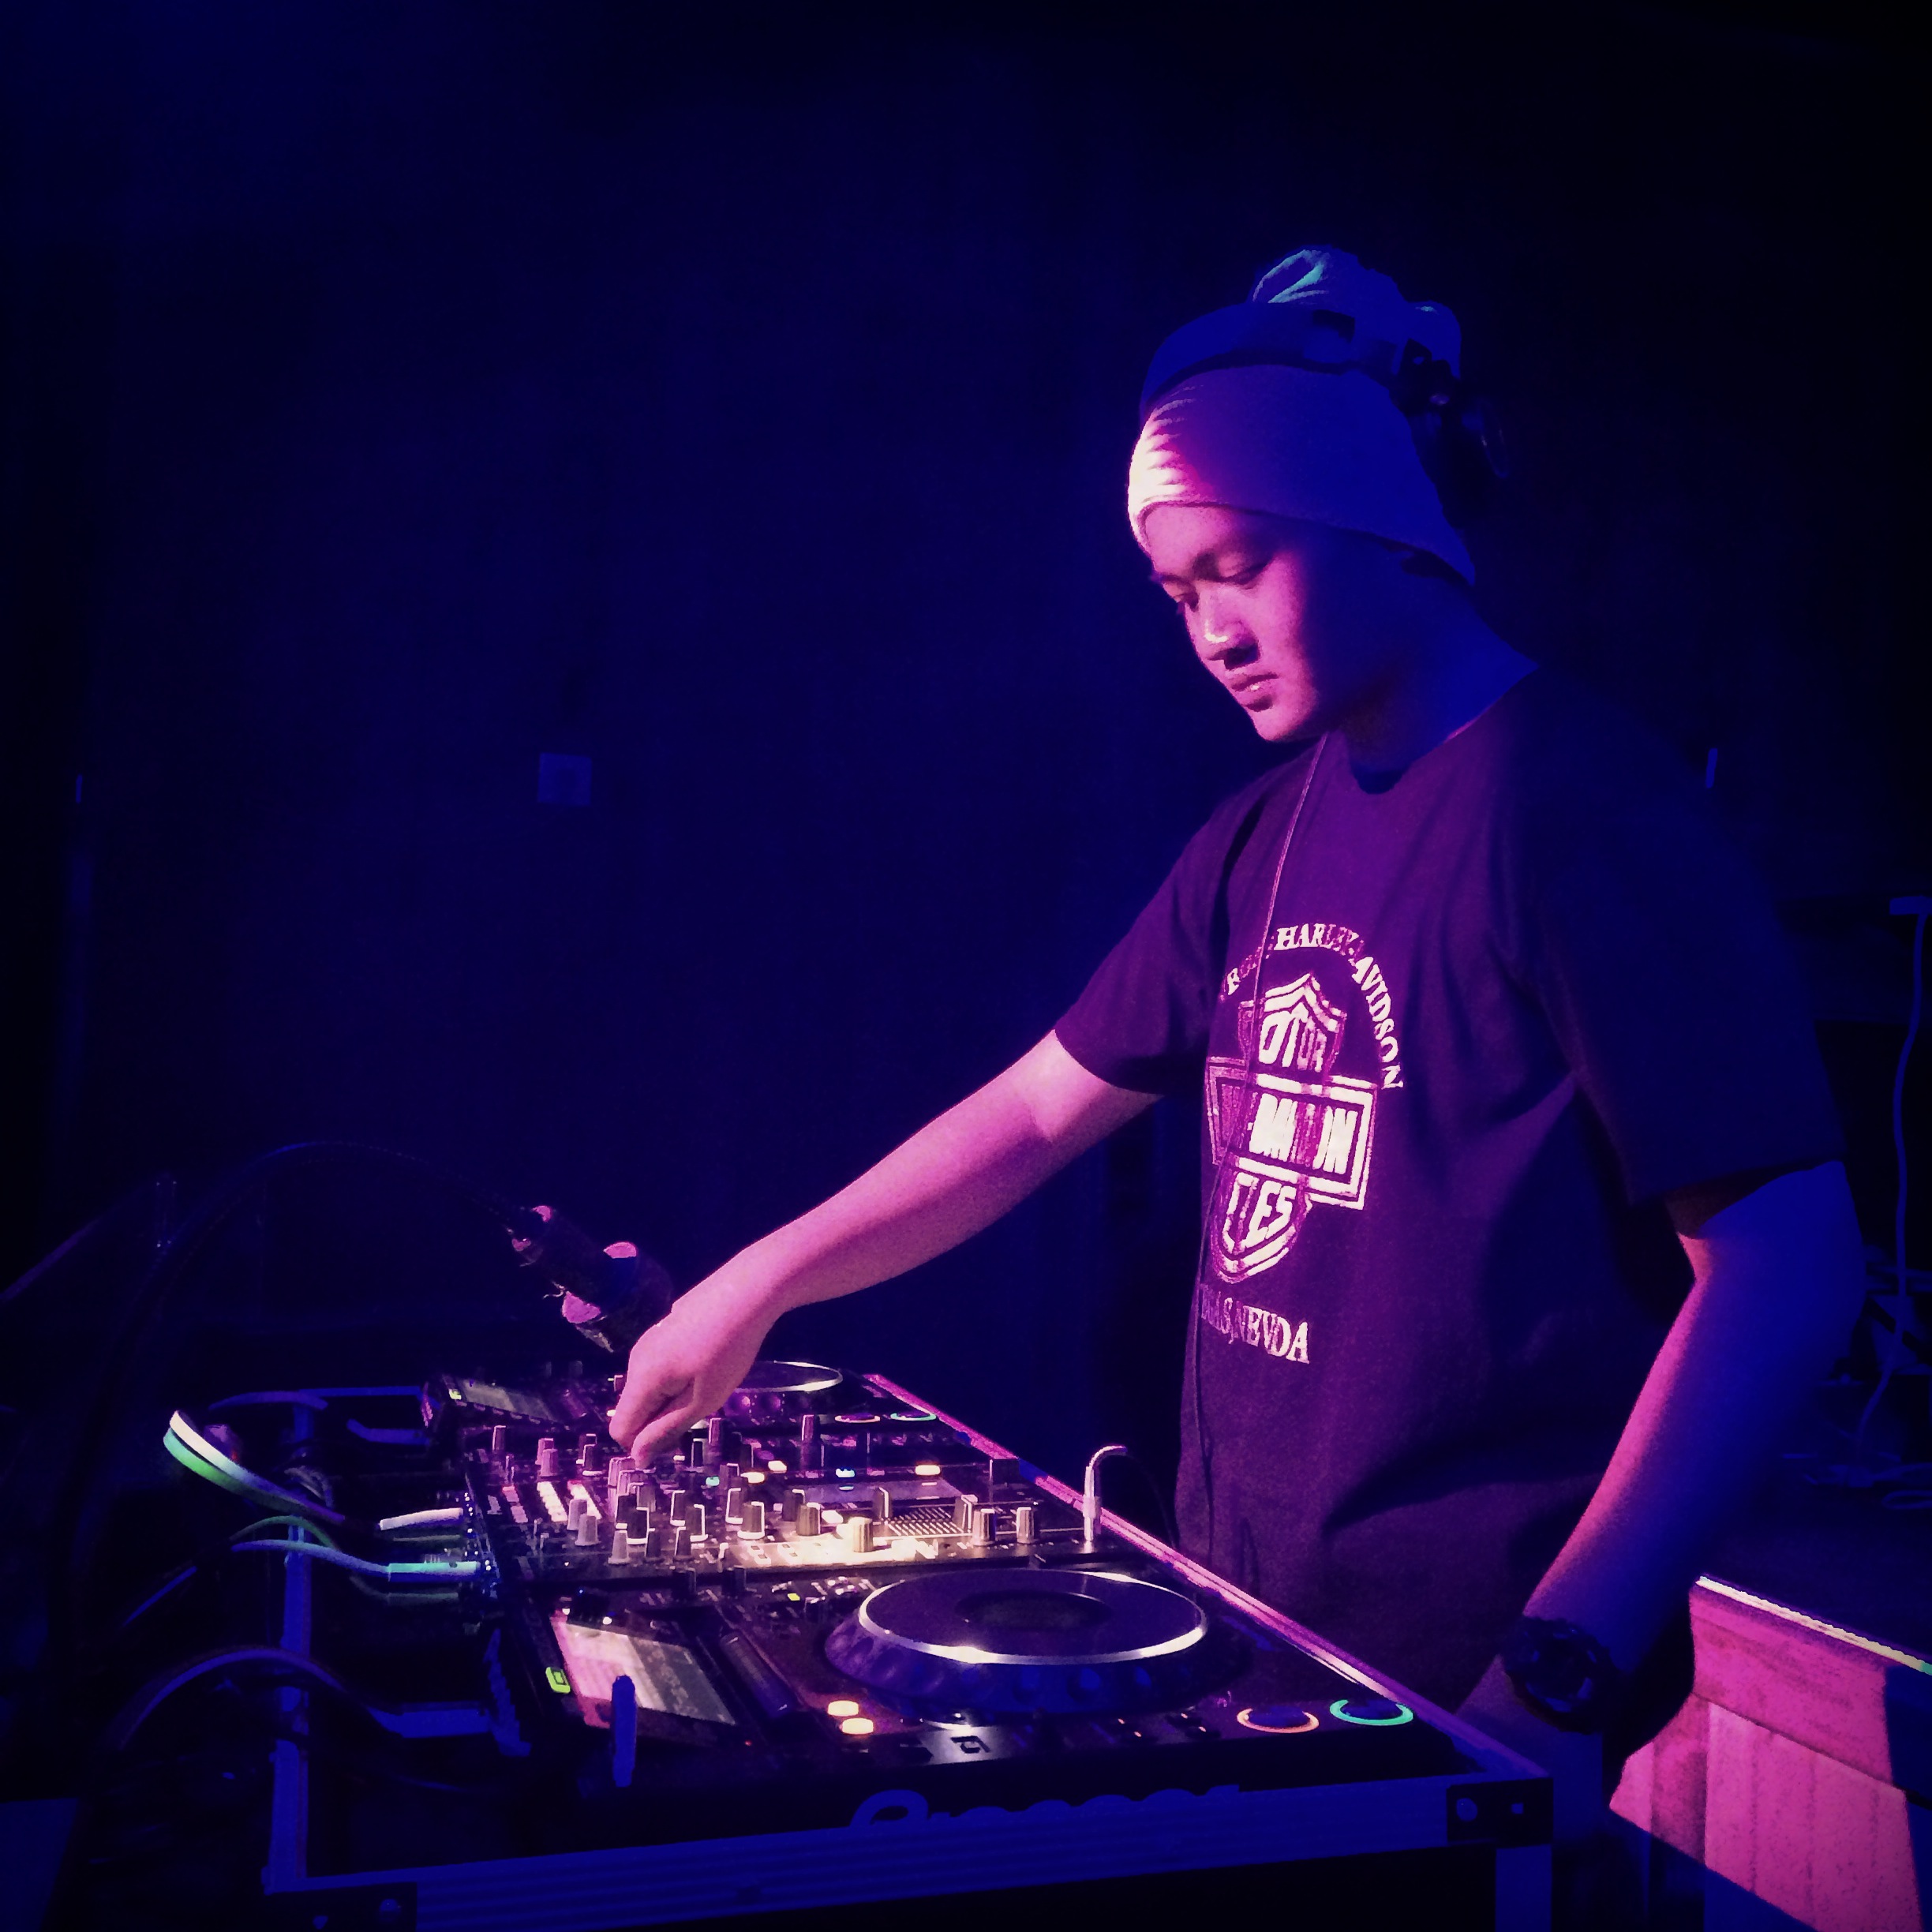 Kursus DJ Surabaya - WordPress.com